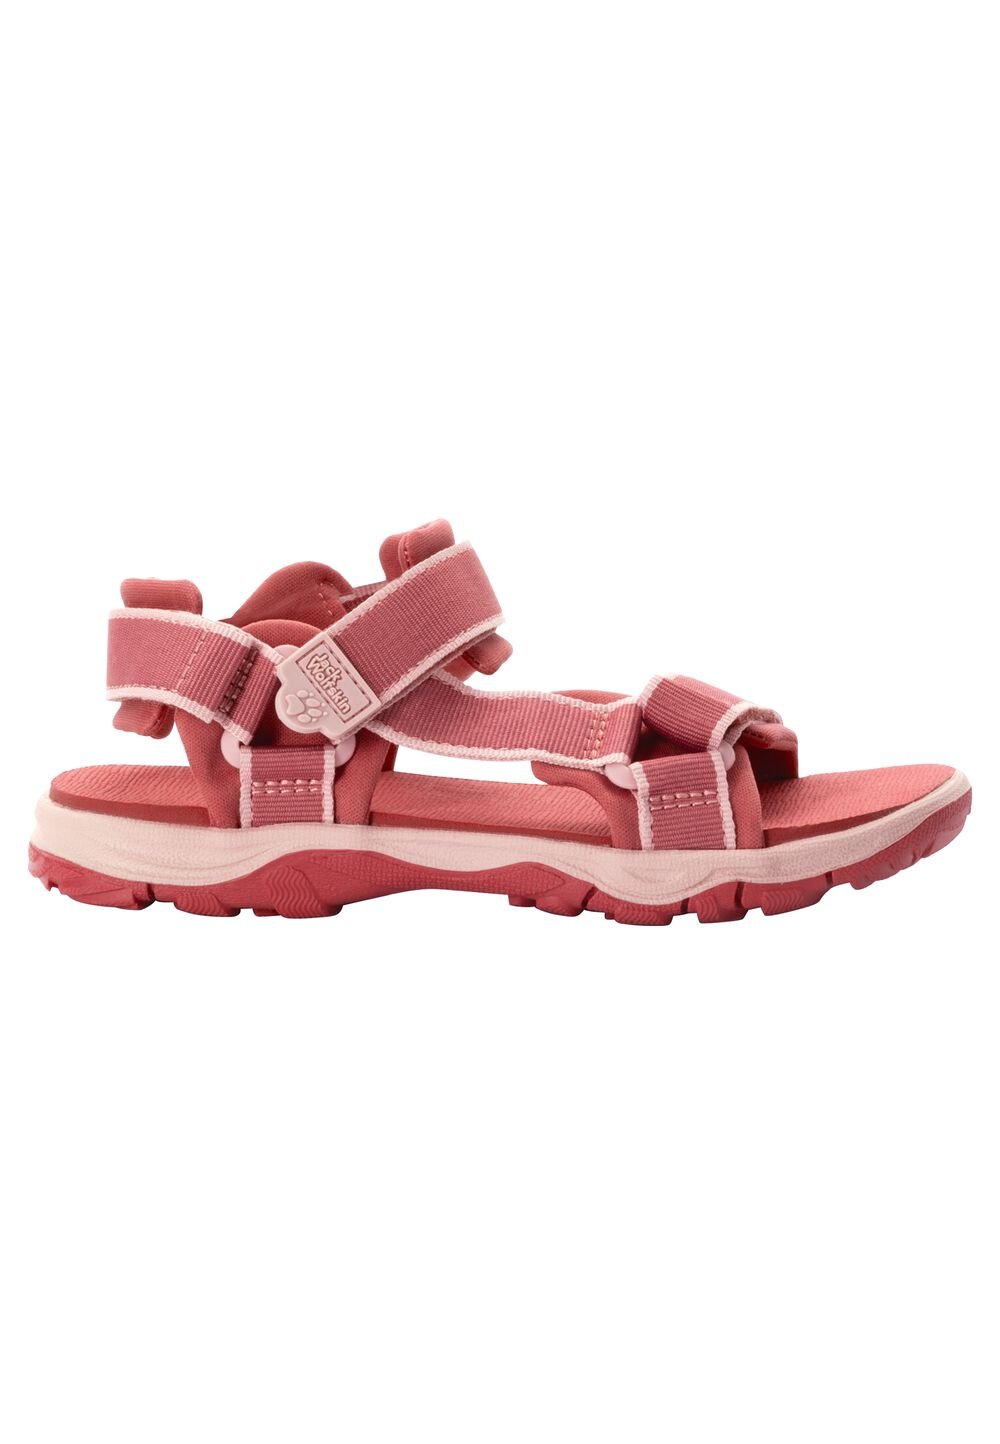 Jack Wolfskin Seven Seas 3 Kids Kinderen sandalen 39 soft pink soft pink